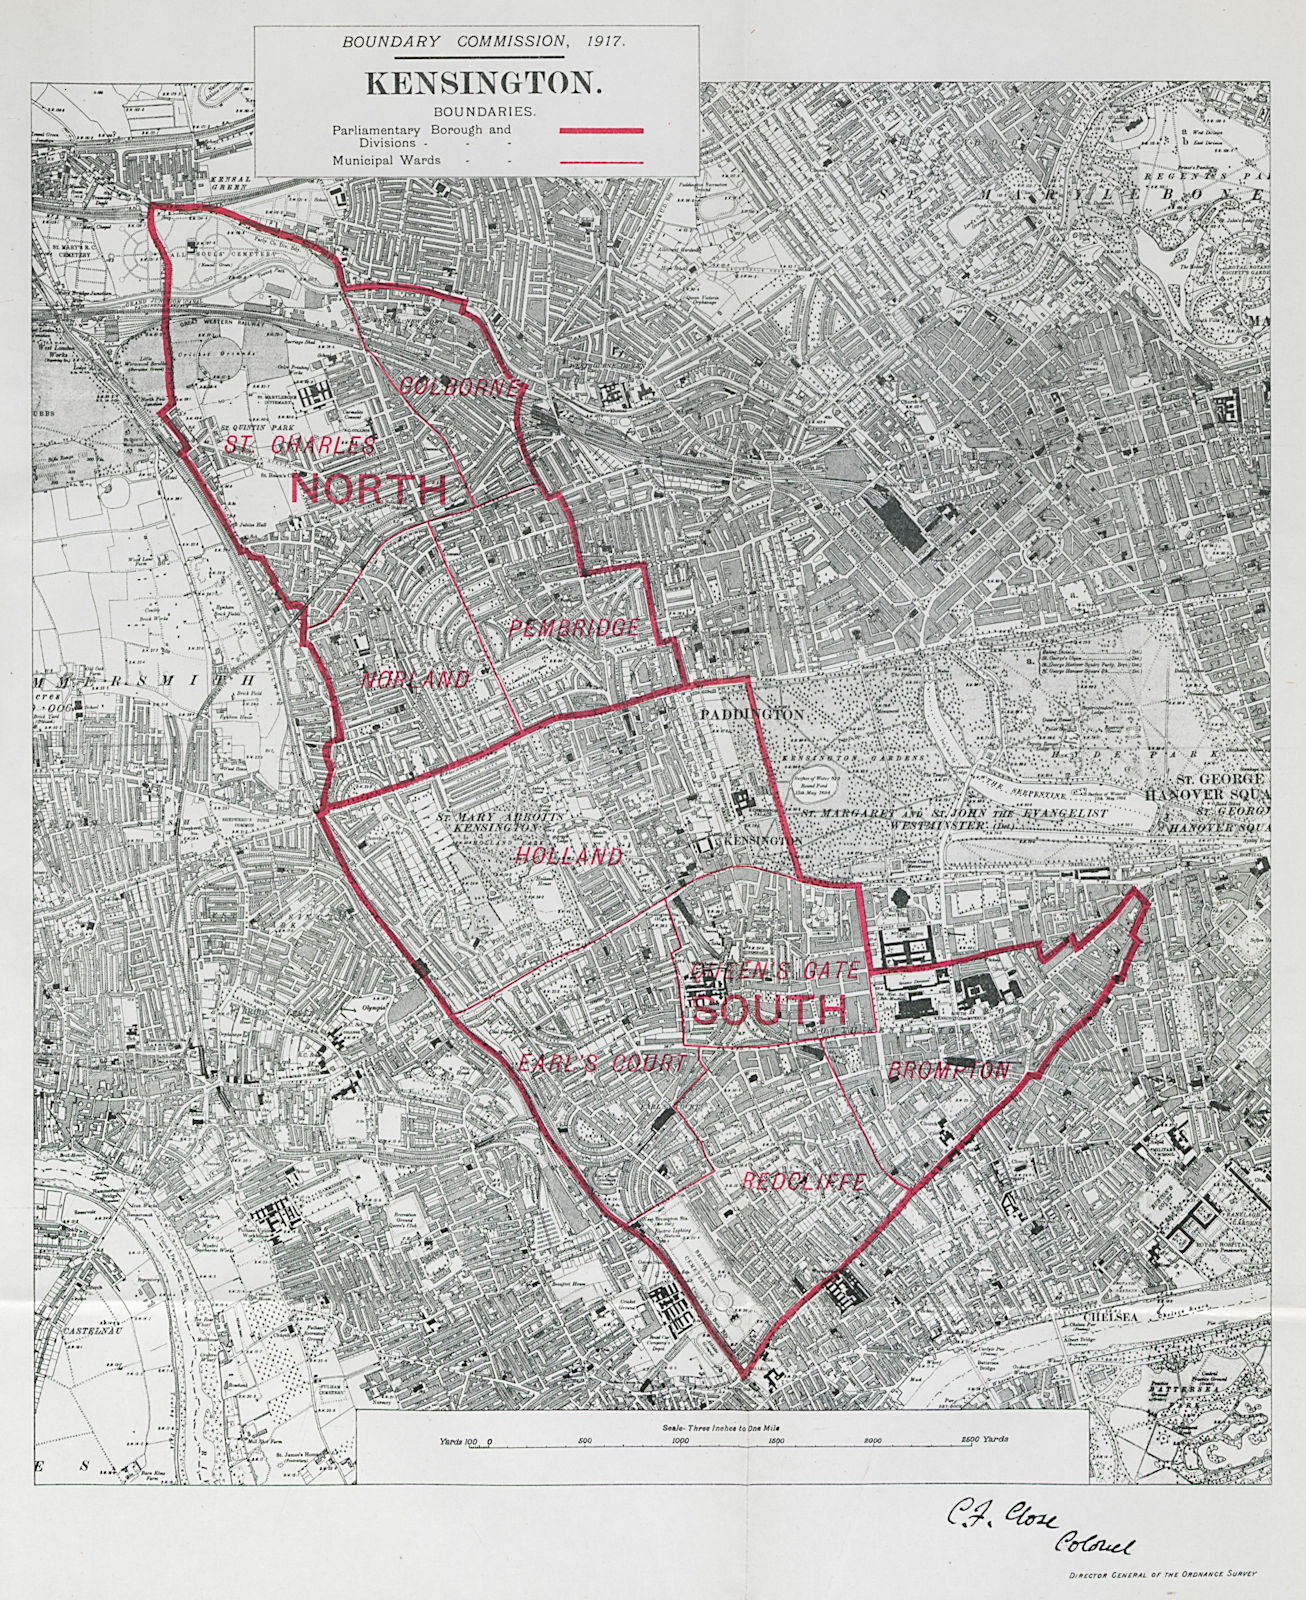 Kensington Parliamentary Borough. Holland Park. BOUNDARY COMMISSION 1917 map